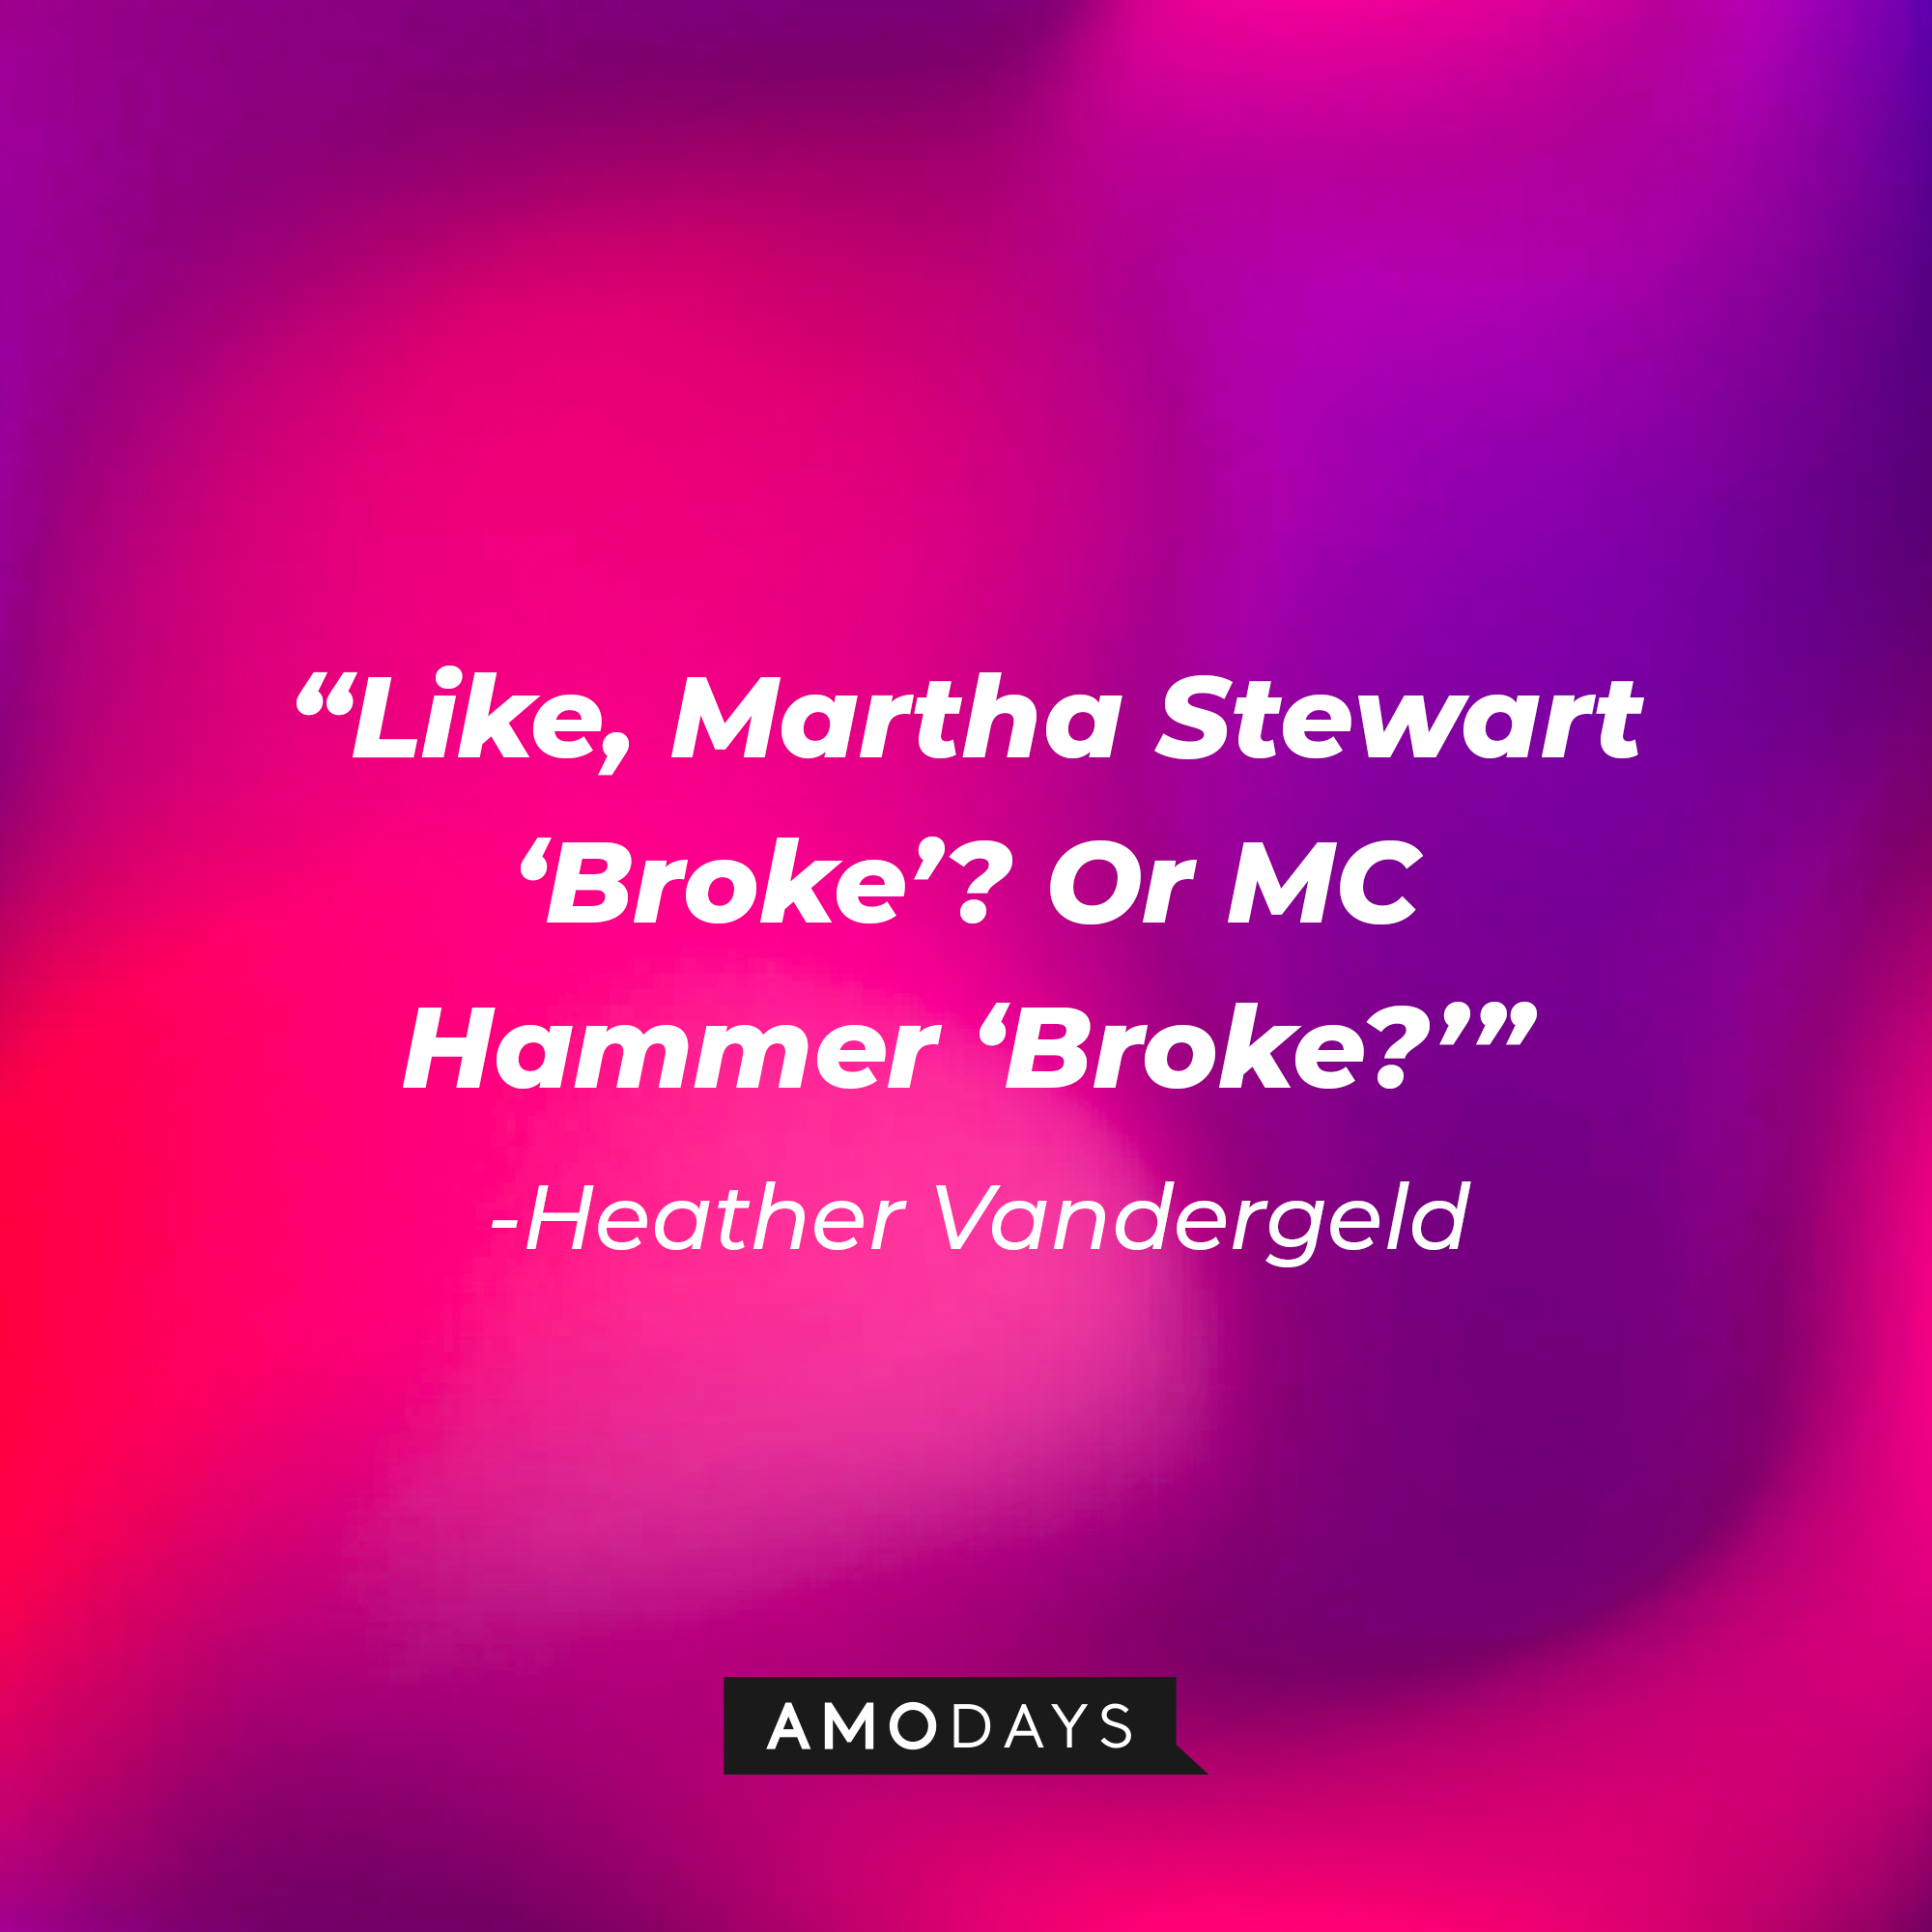 Heather Vandergeld’s quote: “Like, Martha Stewart 'Broke'? Or MC Hammer 'Broke?'"  | Source: AmoDays